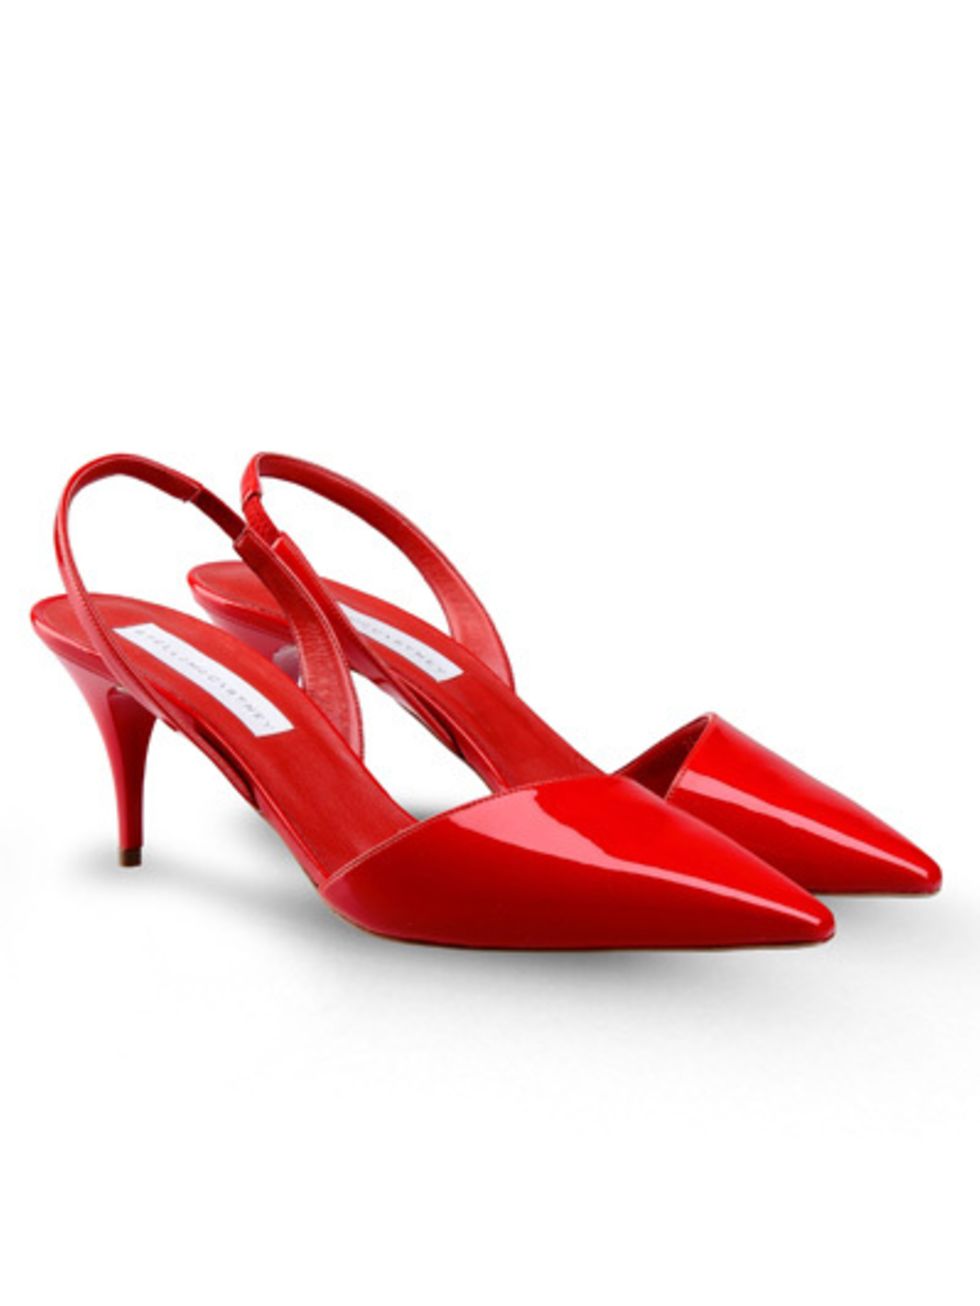 Sandal, Red, Carmine, Basic pump, High heels, Slingback, Dancing shoe, Bridal shoe, Fashion design, 